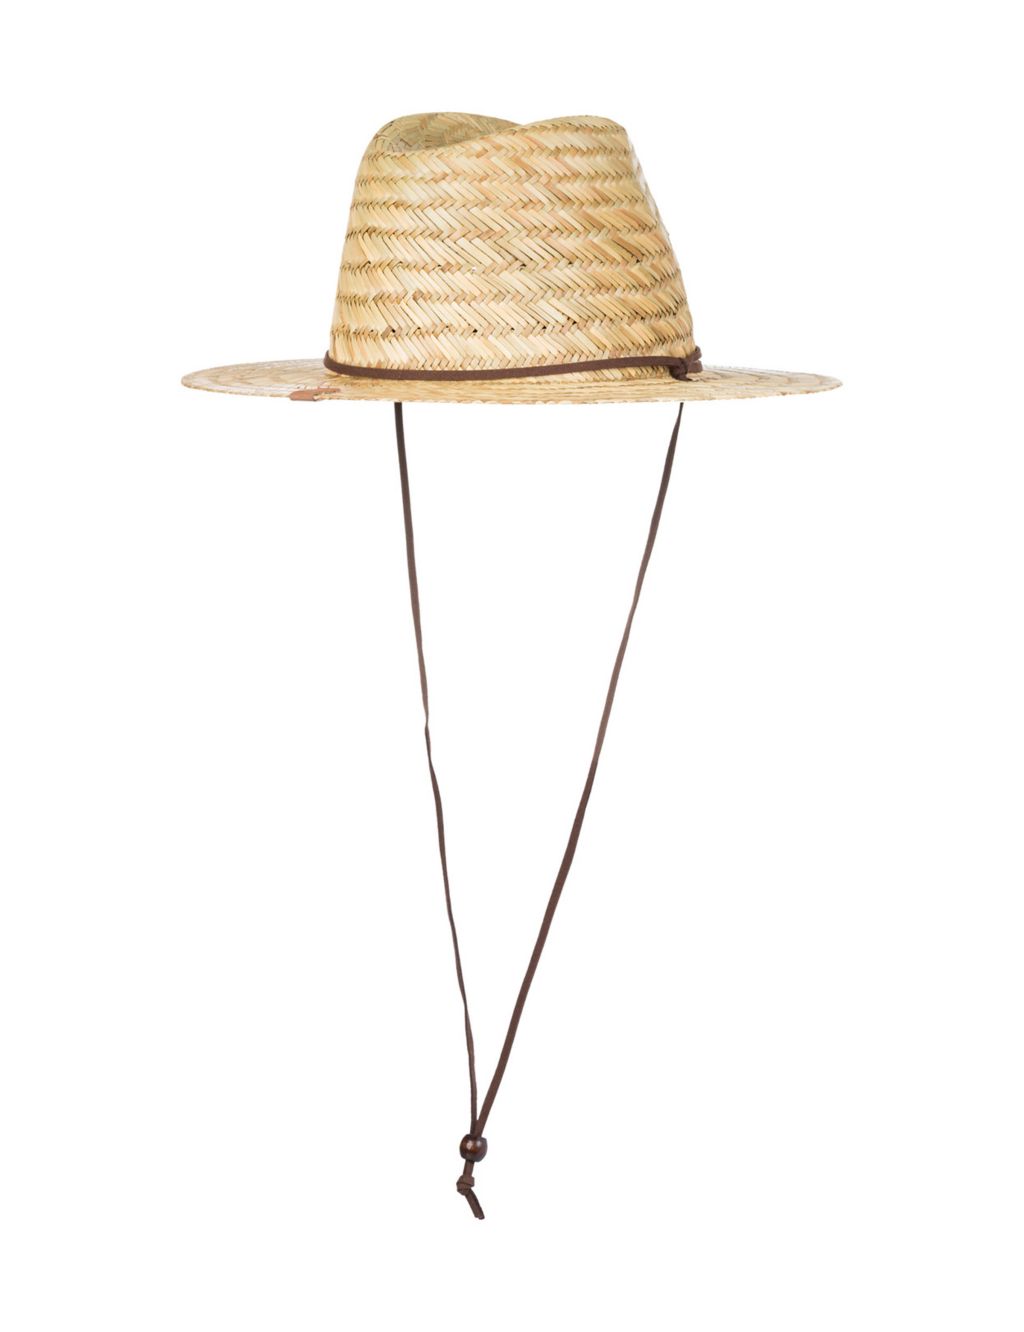 Jettyside 2 Straw Panama Hat 3 of 5